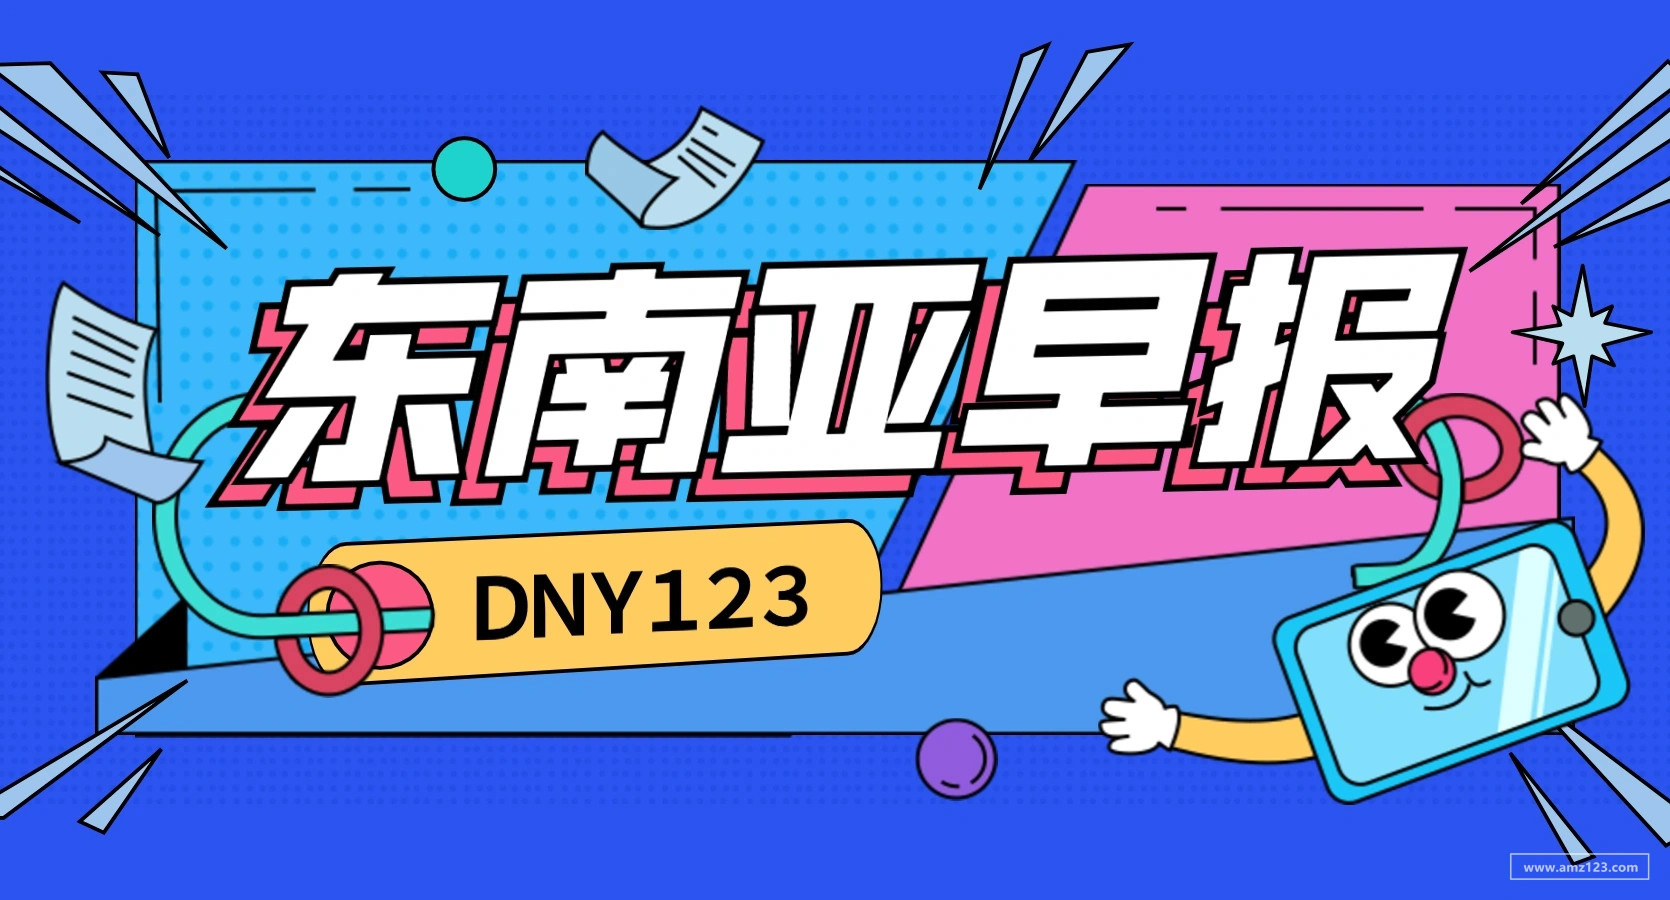 【DNY123跨境早报】Shopee马来海外仓开通货到付款功能，Ninja Van发布东南亚电商报告